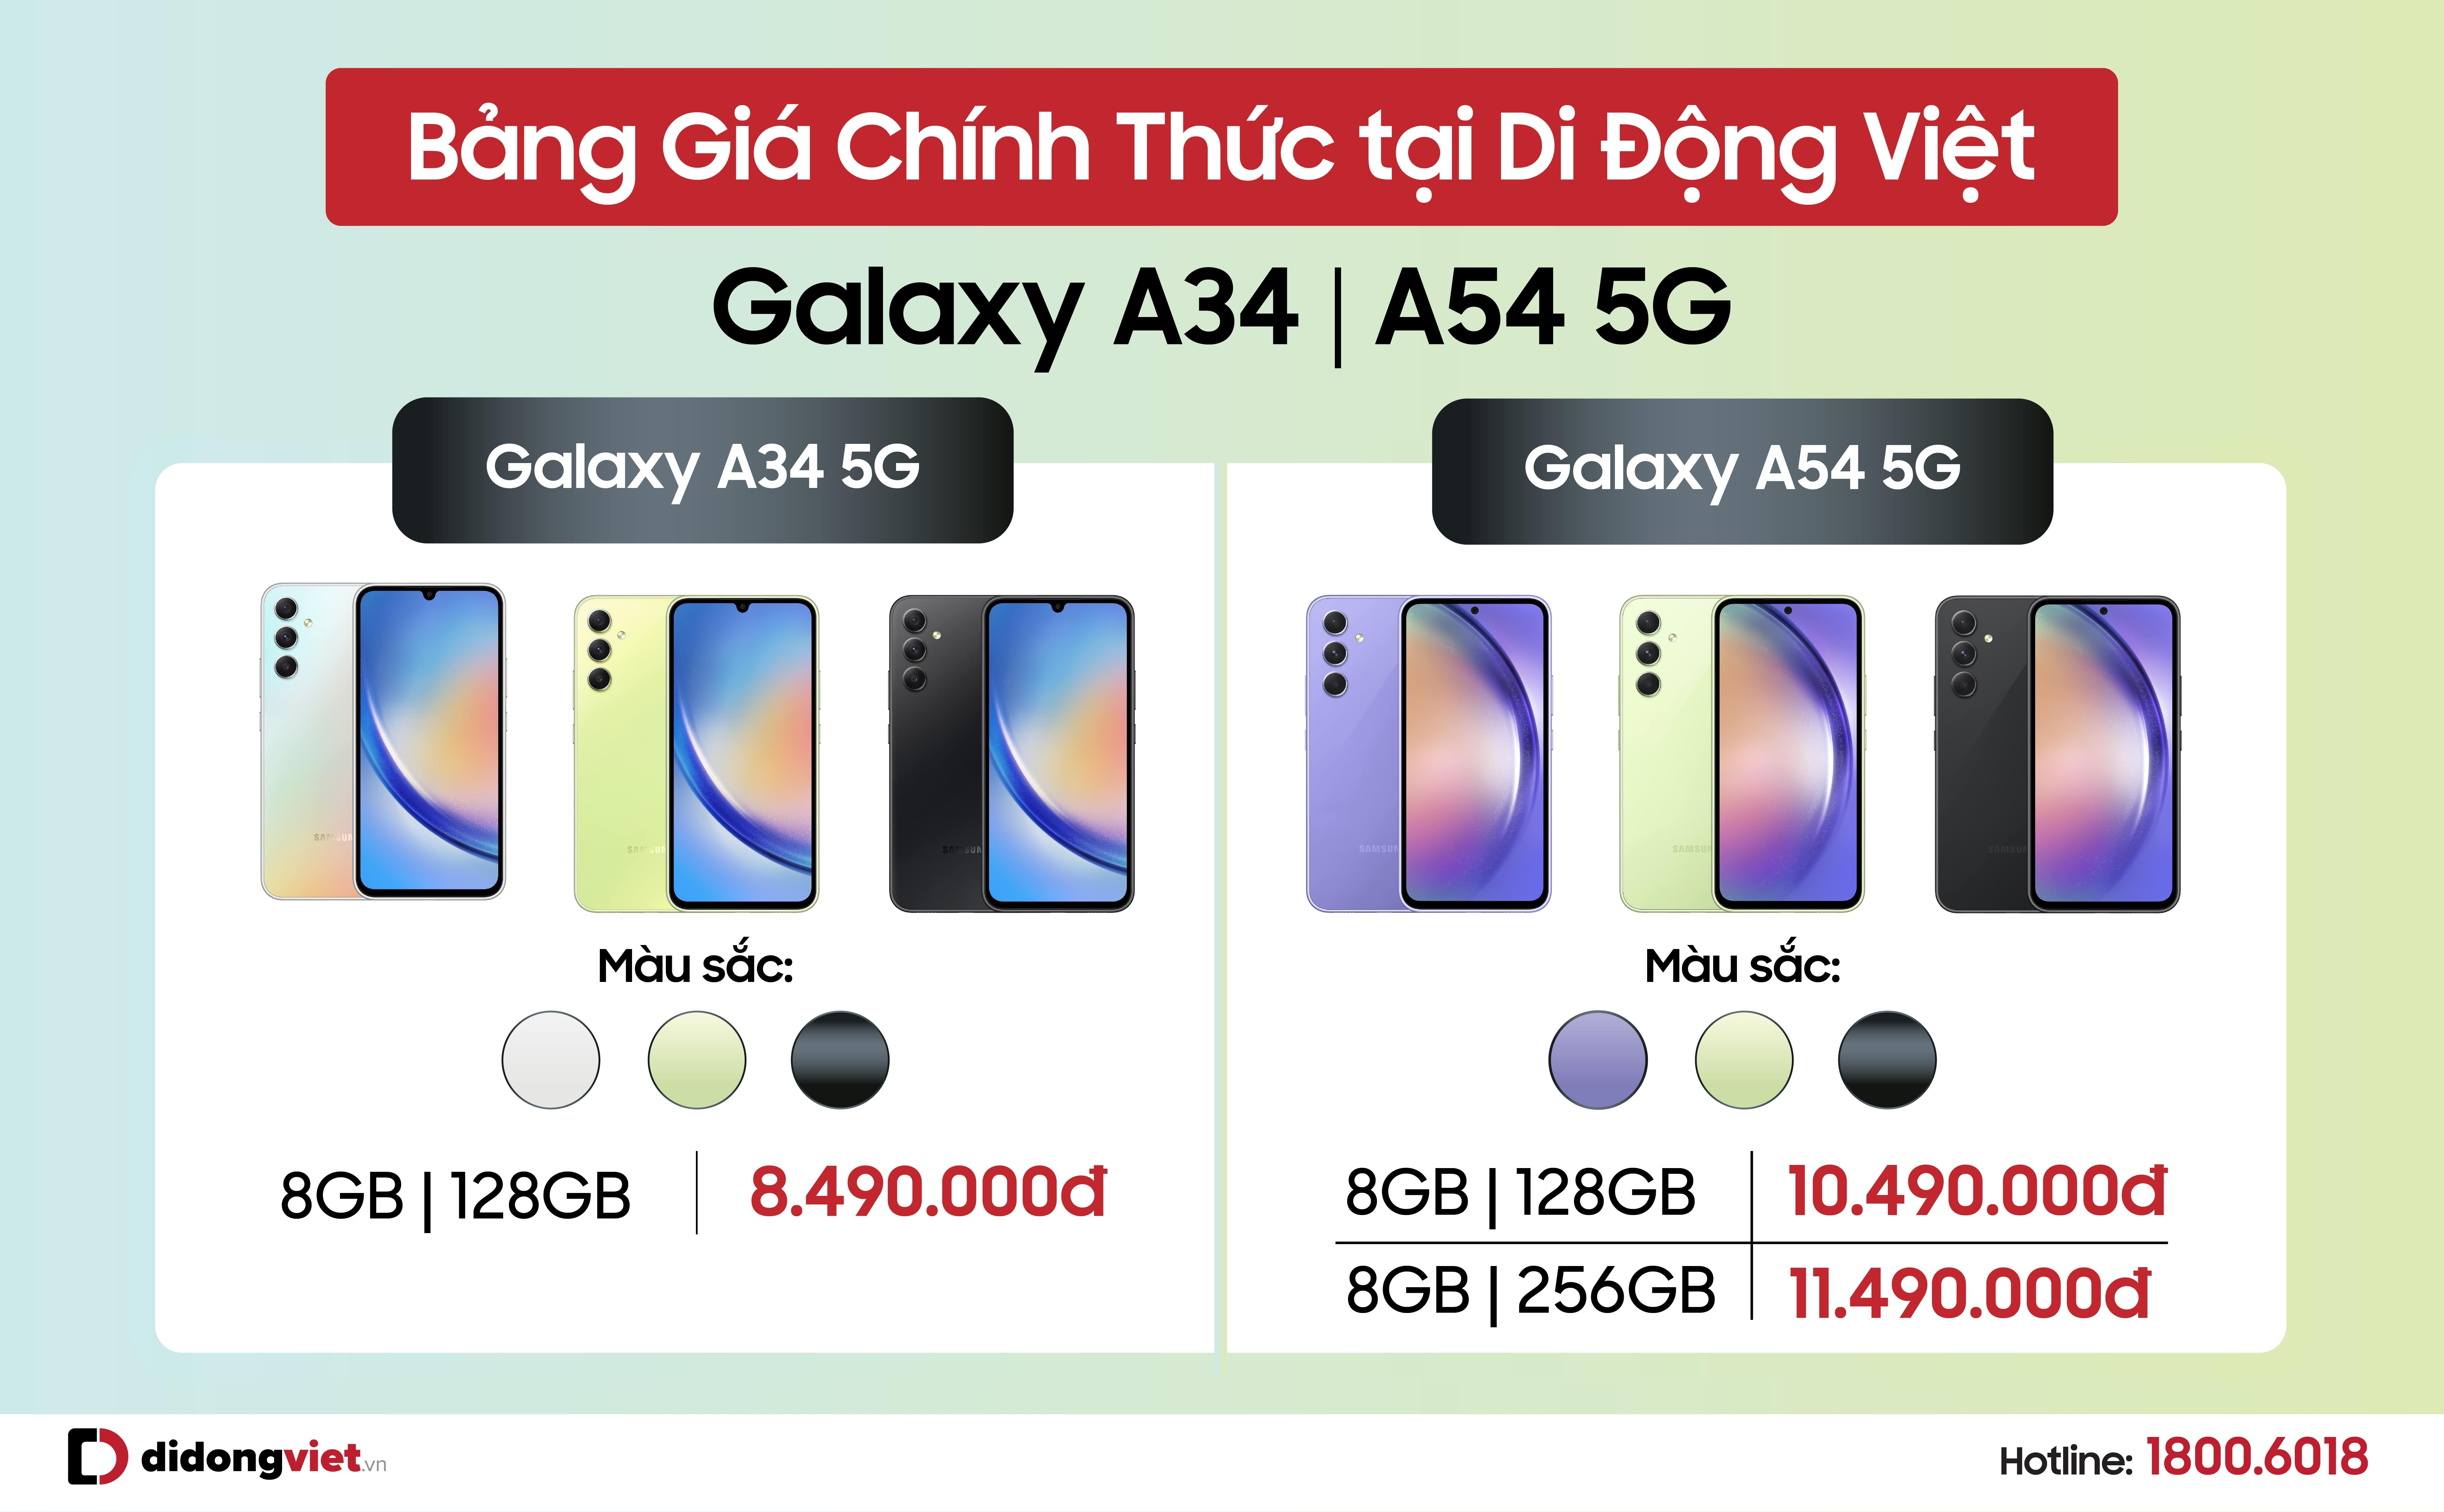 bang-gia-chinh-thuc-cua-galaxy-a34-va-a54-5g-tai-di-dong-viet-1678880978.jpg